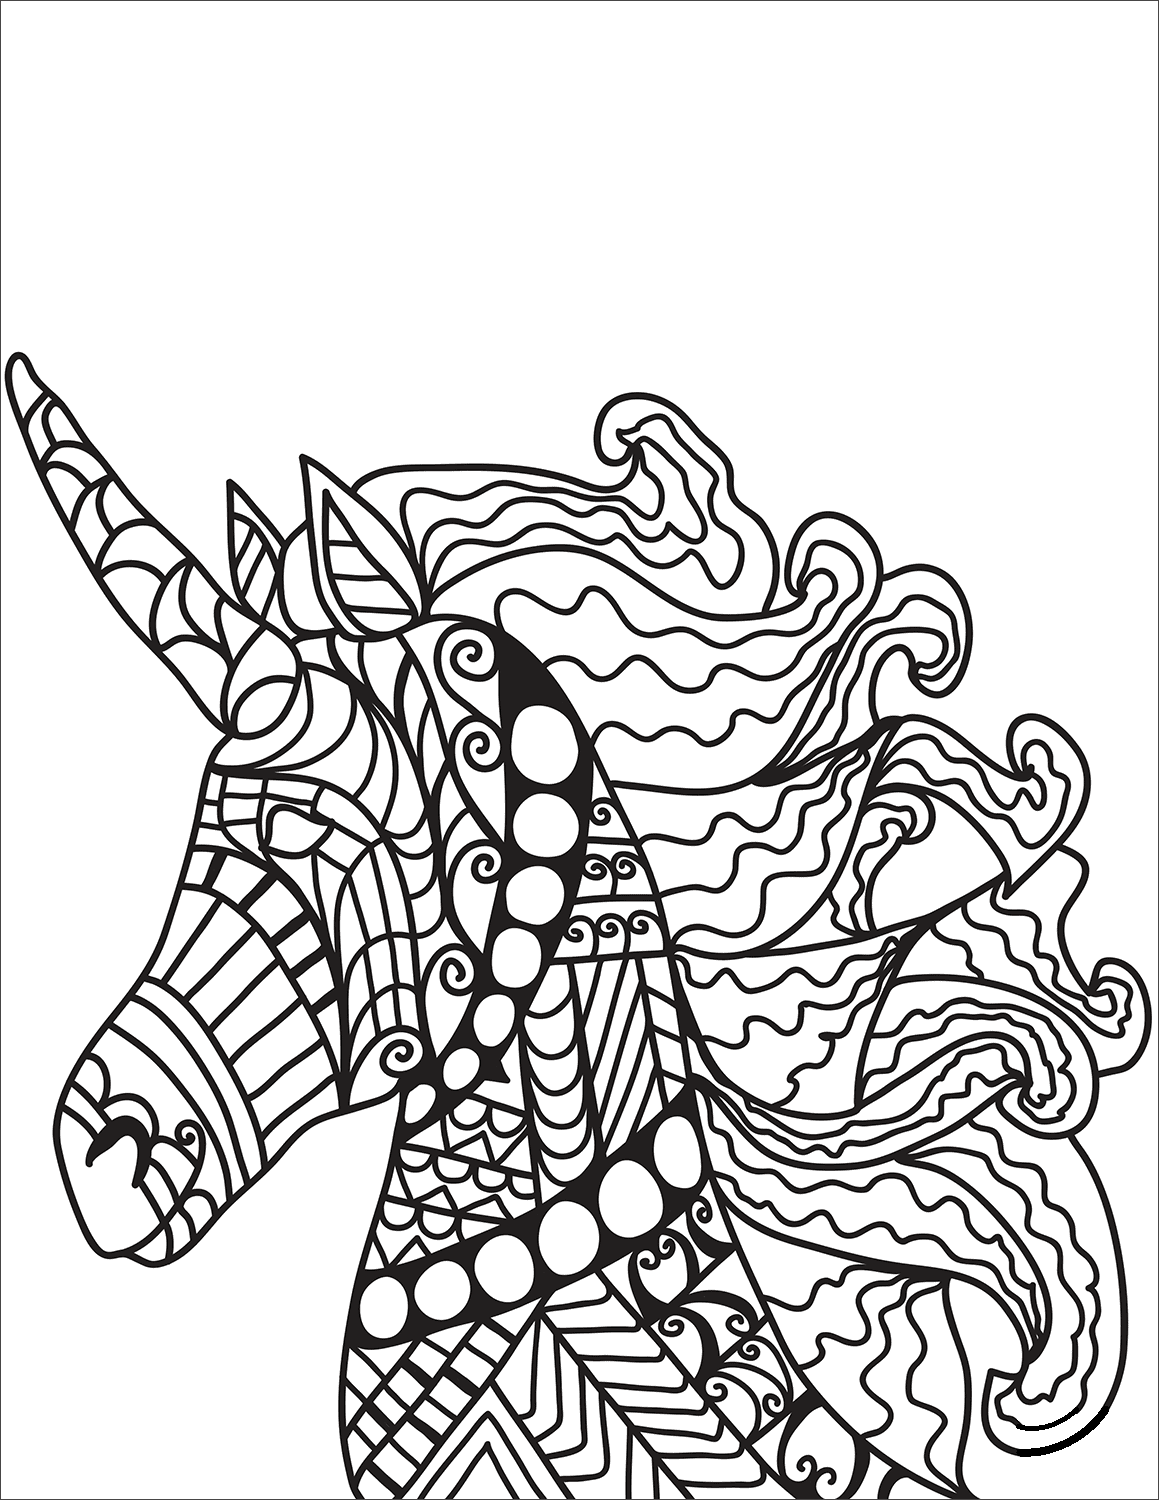 Unicorn Zentangle Coloring Page